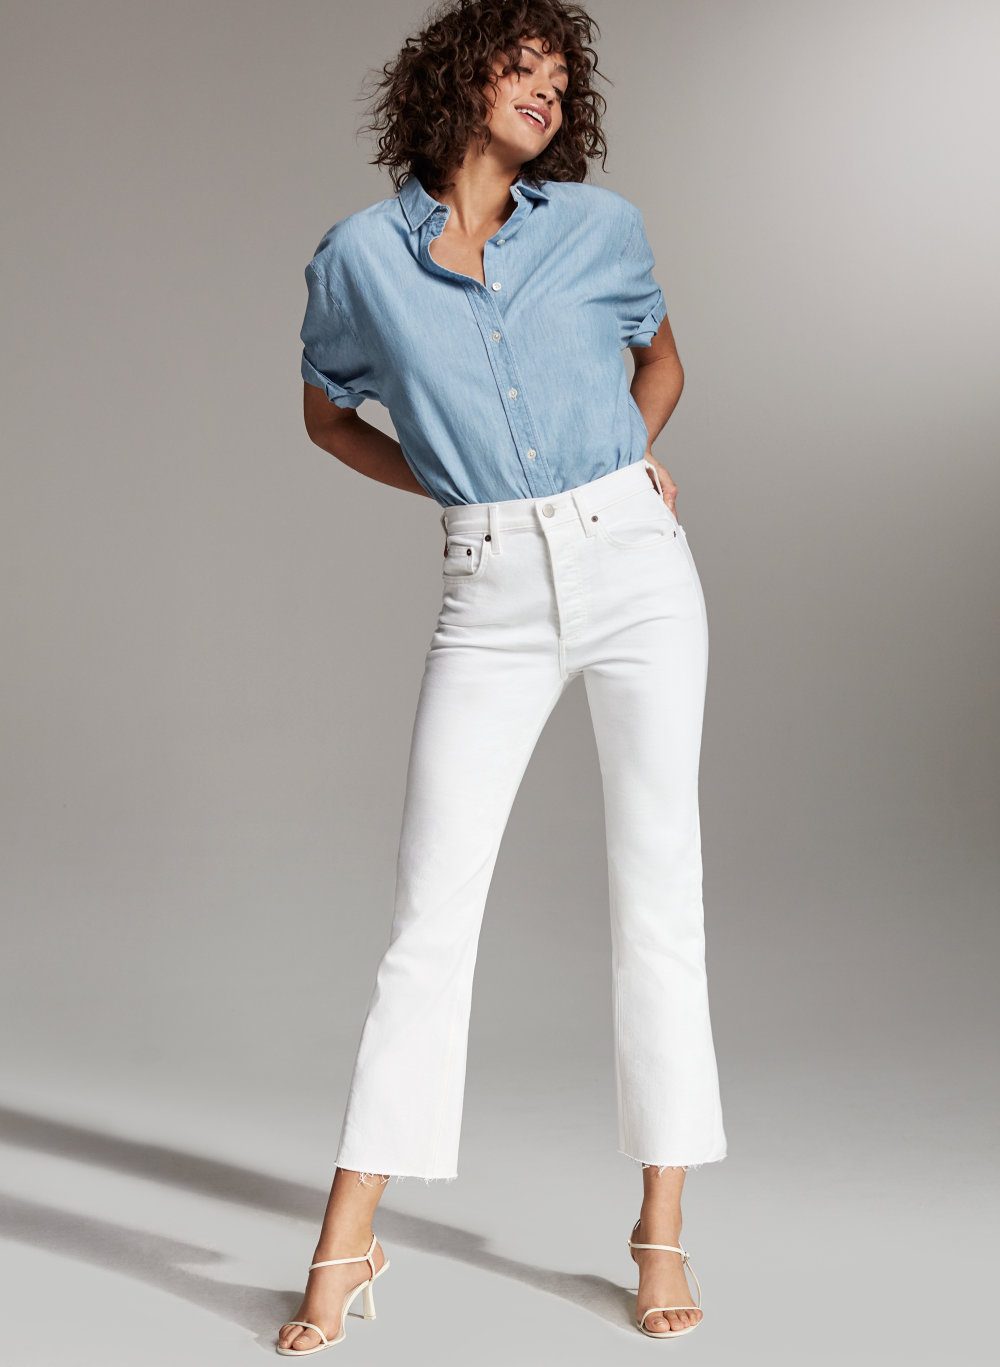 aritzia white jeans